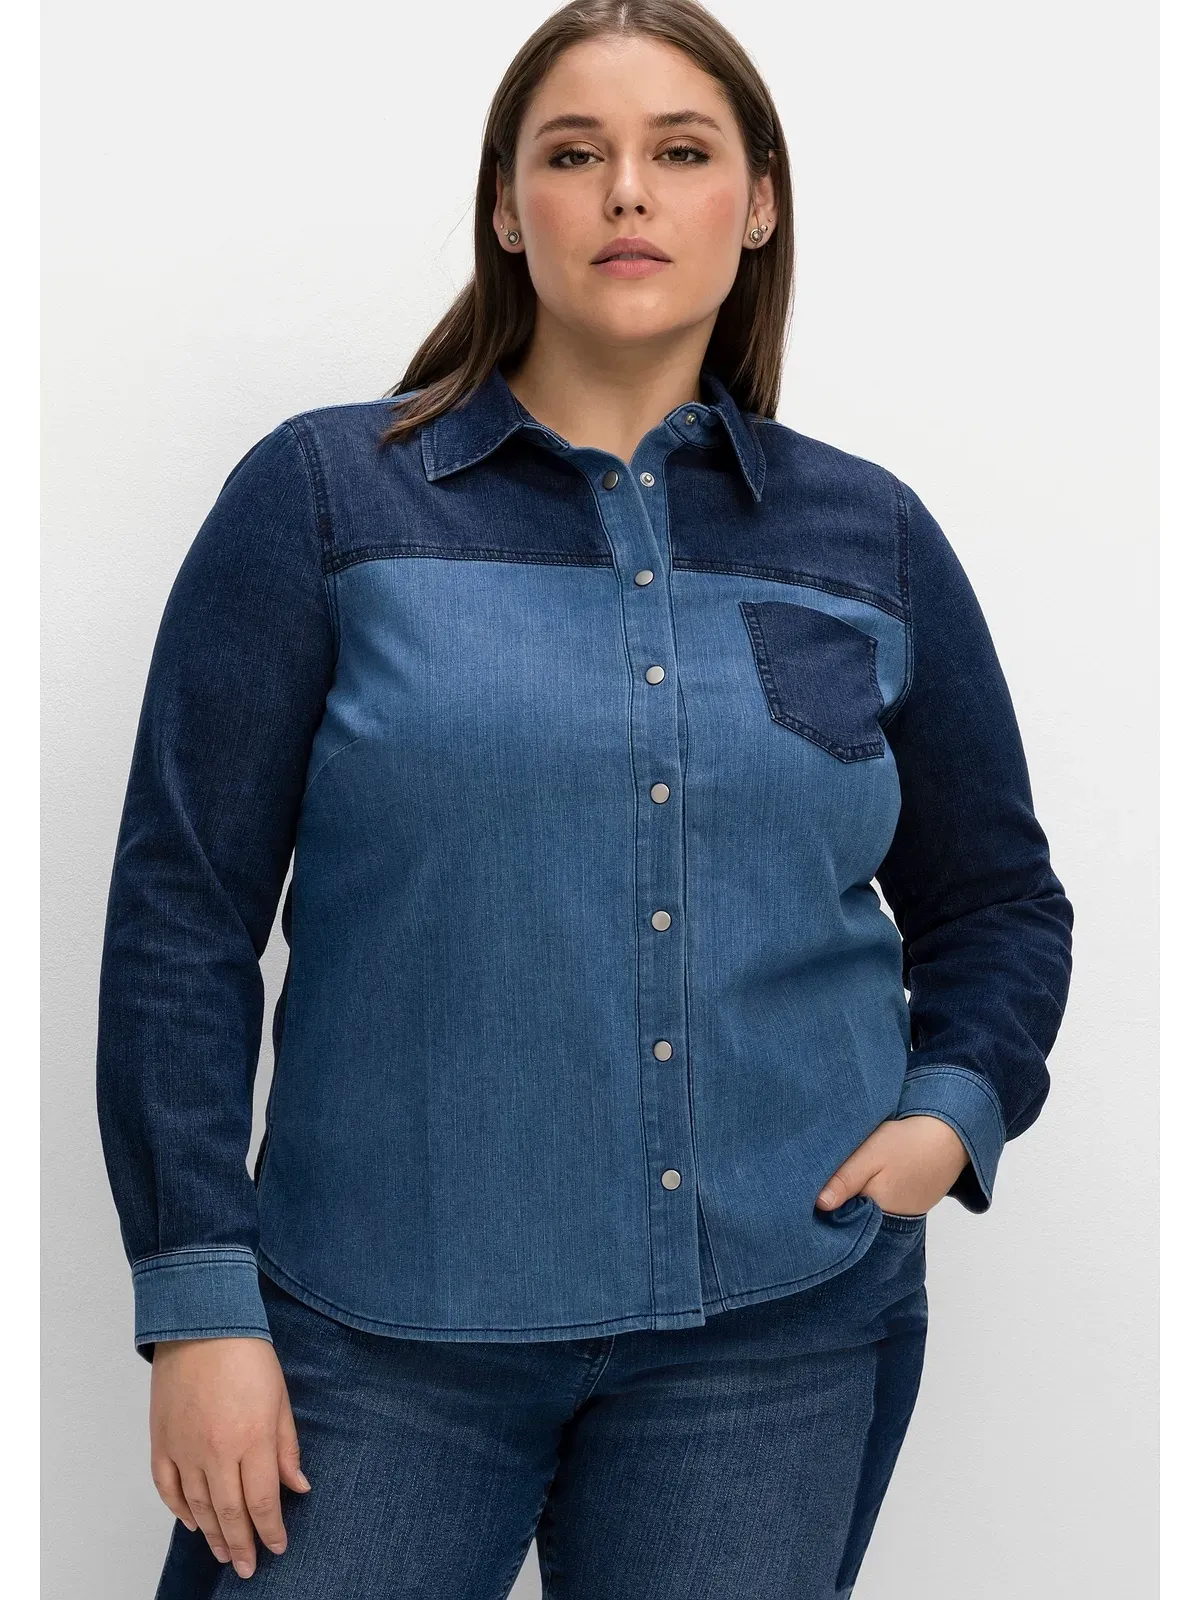 Jeansbluse SHEEGO "Große Größen" Gr. 44, blau (blue denim) Damen Blusen langarm